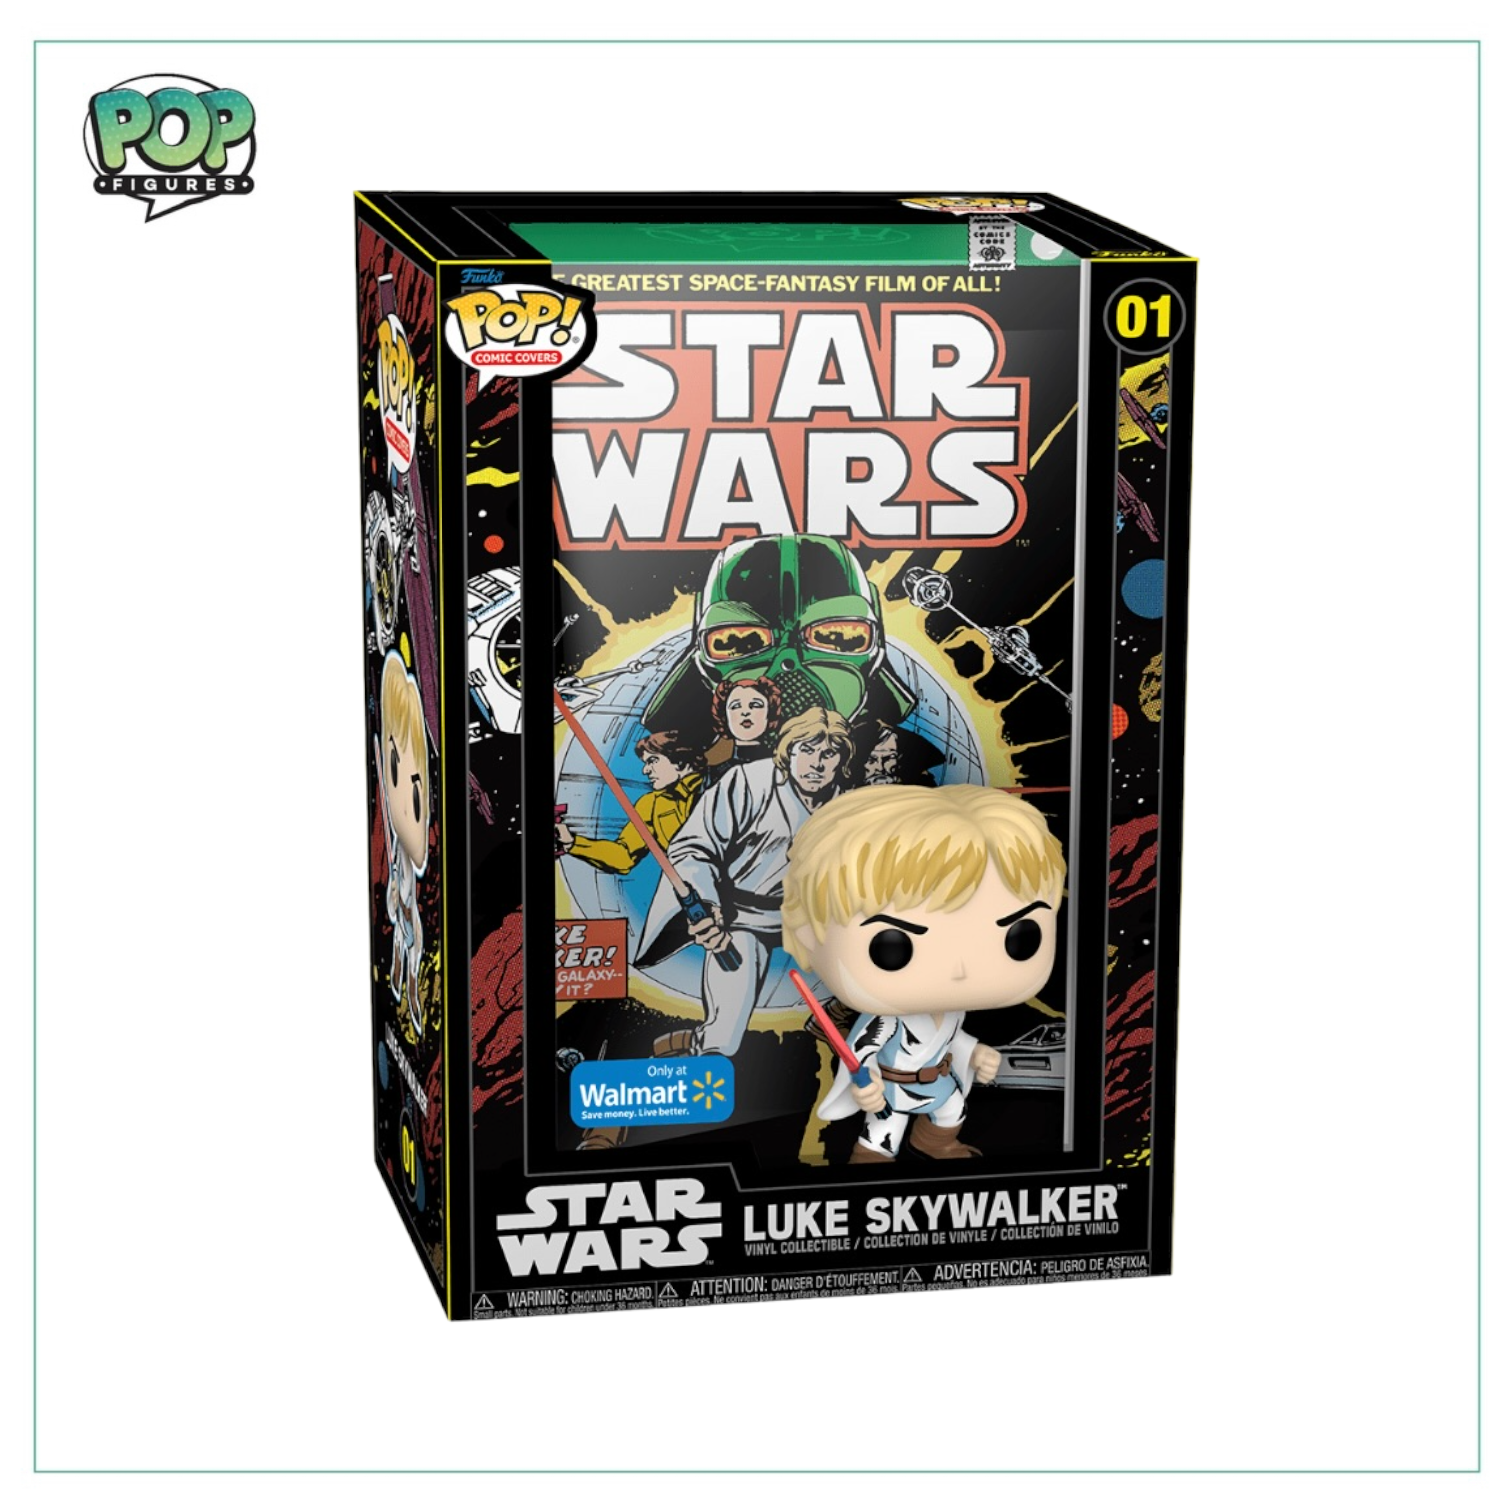 Luke Skywalker #01 Funko Comic Cover! Star Wars - Walmart Exclusive - Angry Cat